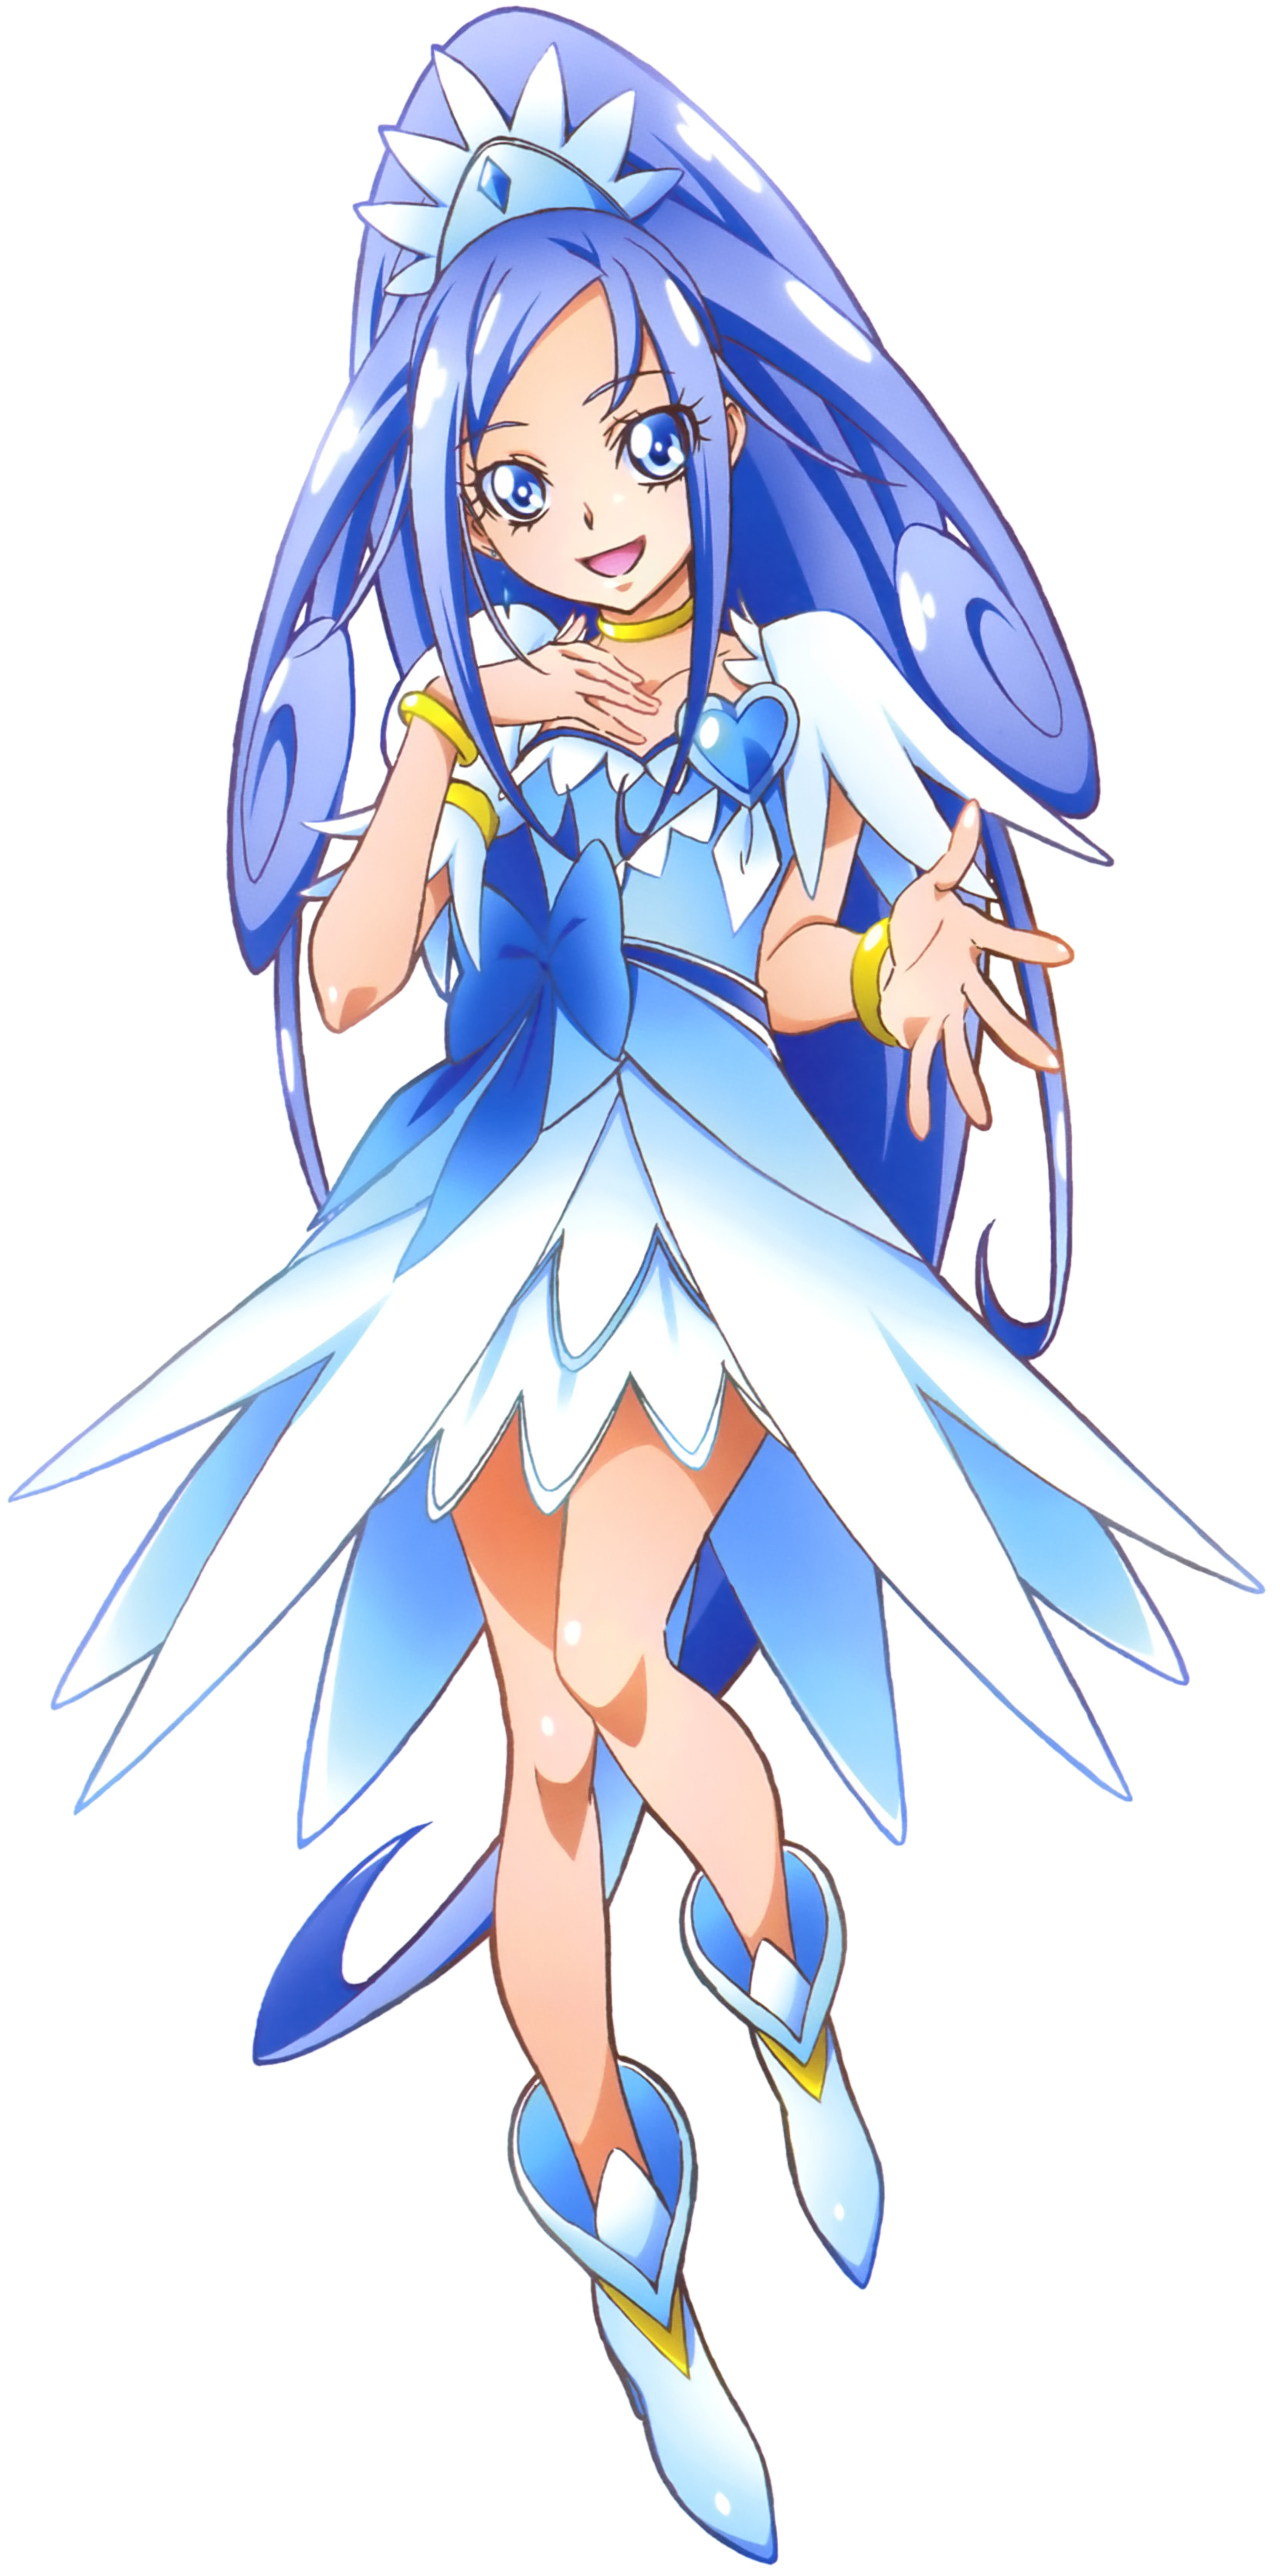 Image Doki Doki Pretty Cure Cure Diamond Pose4png Magical Girl Mahou Shoujo 魔法少女 Wiki 2445